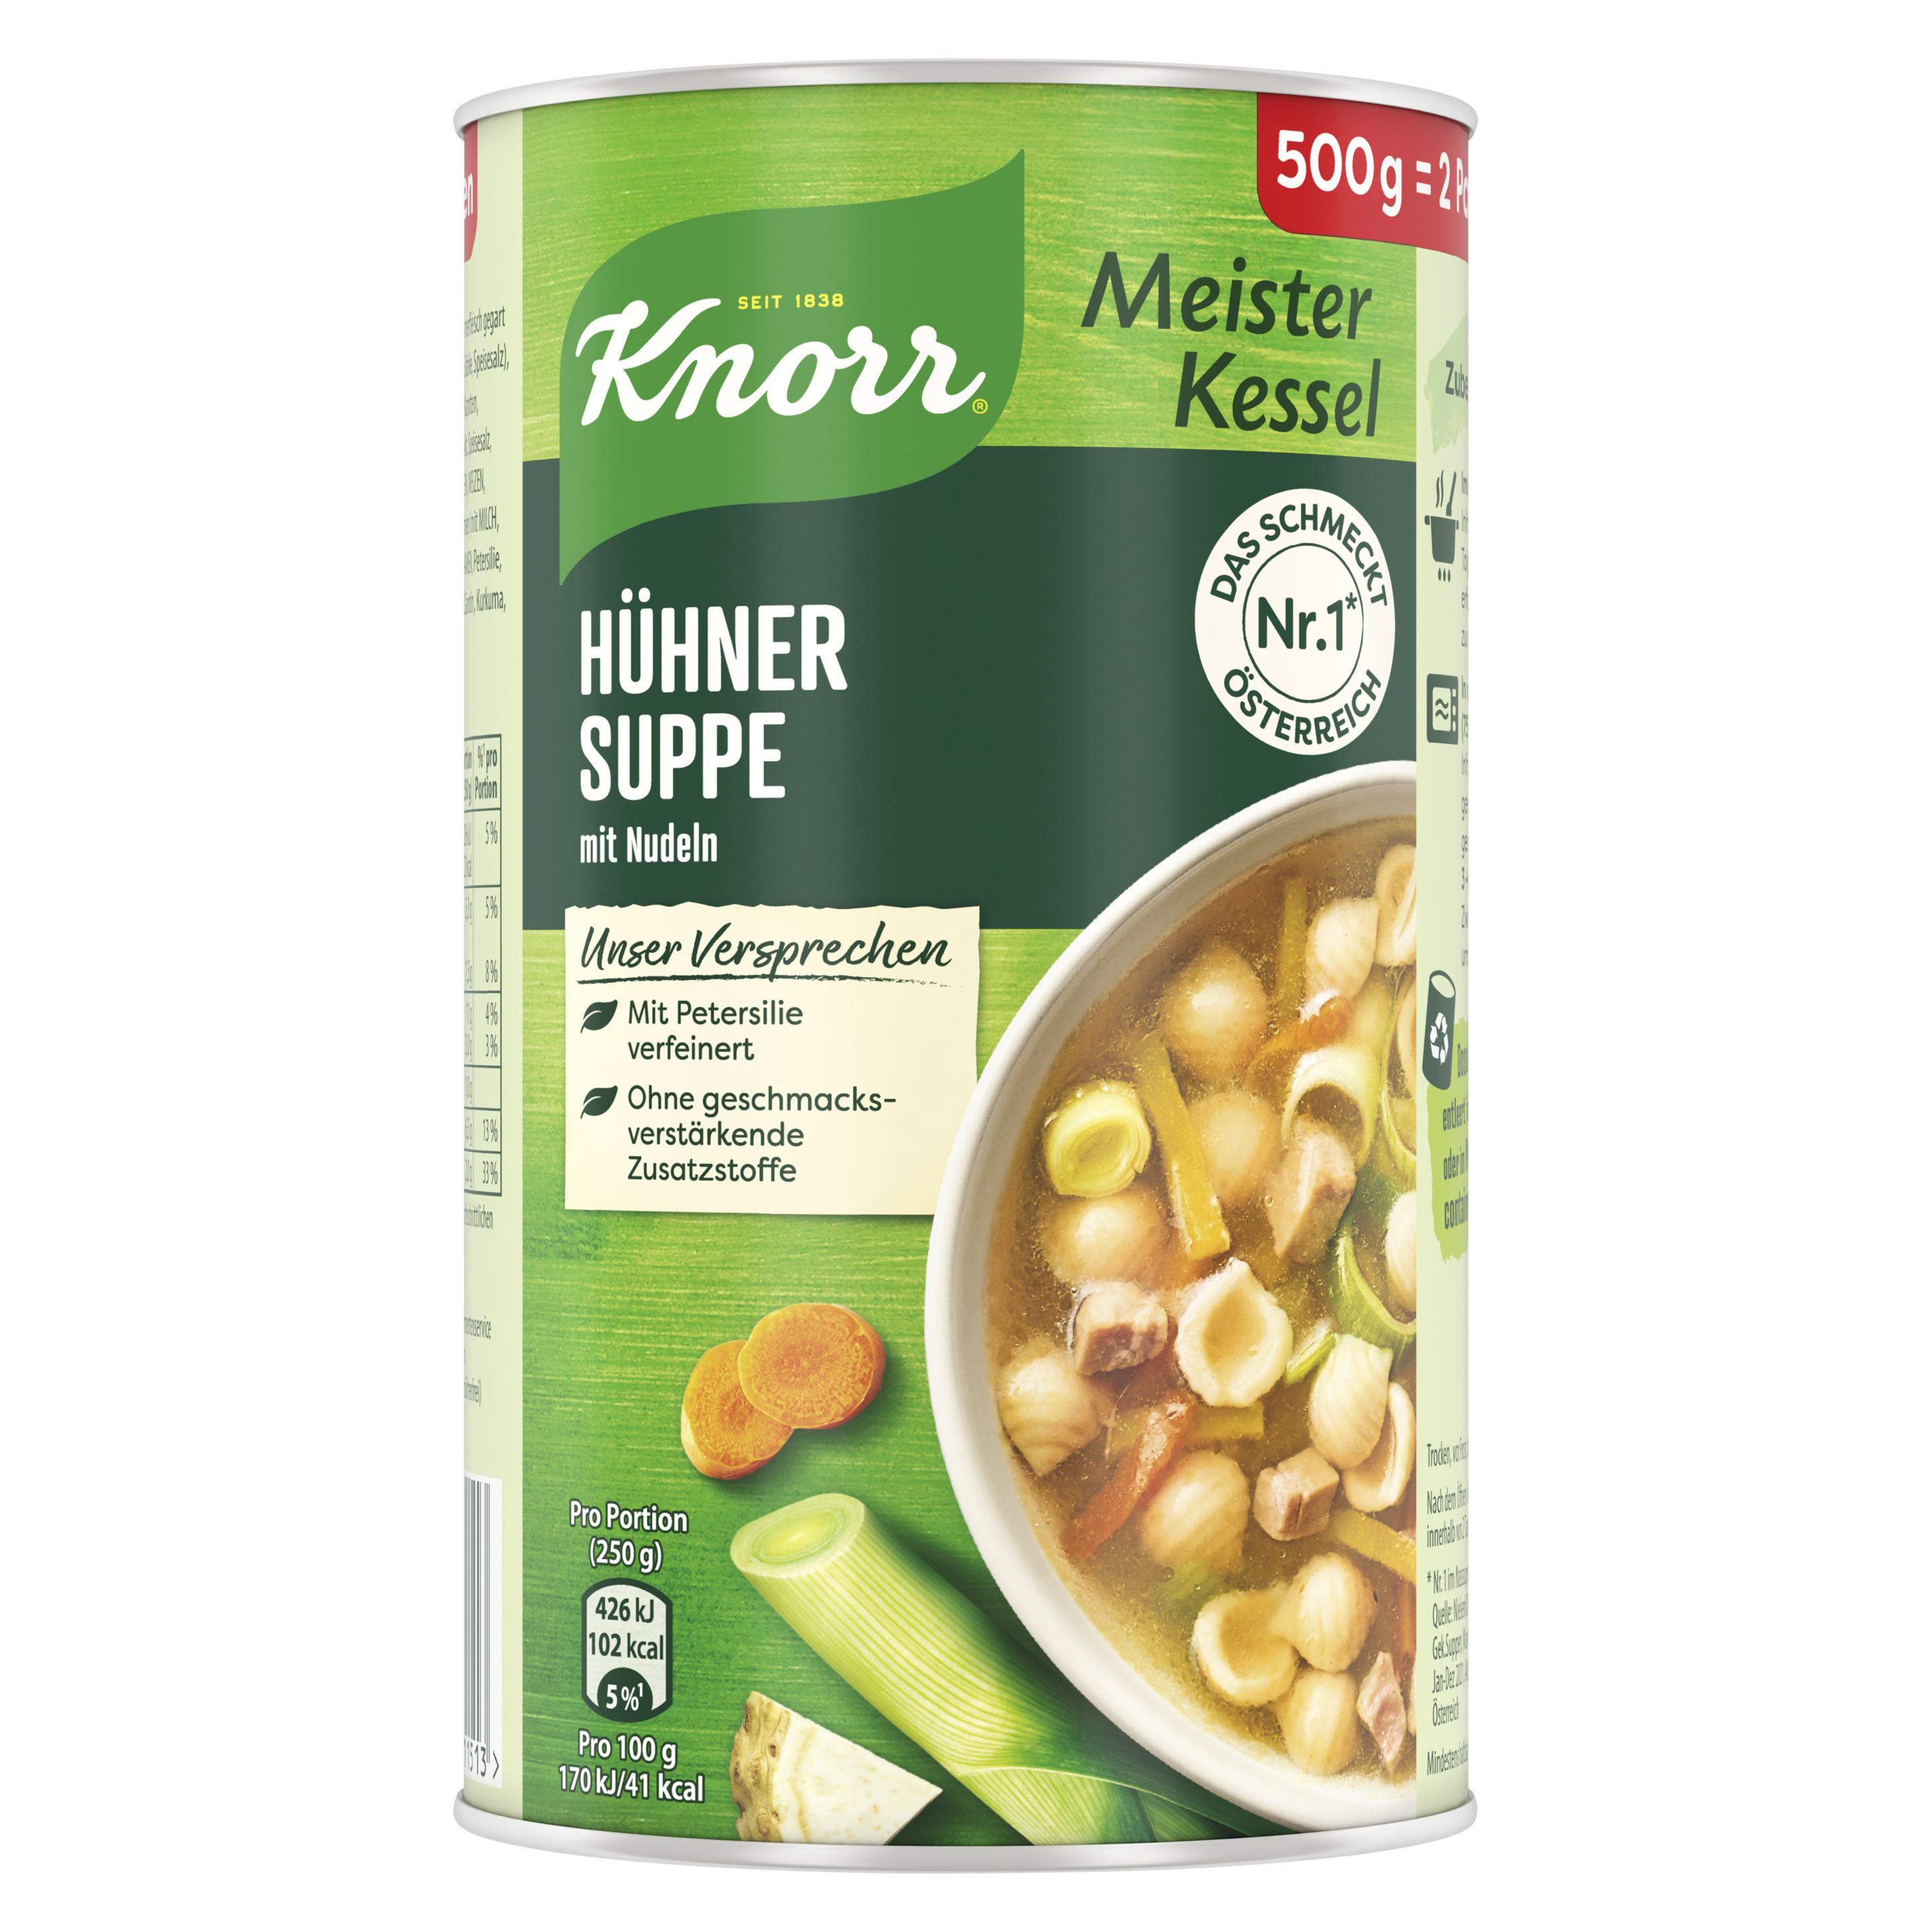 Knorr Meisterkessel Hühner Suppe 2 Teller